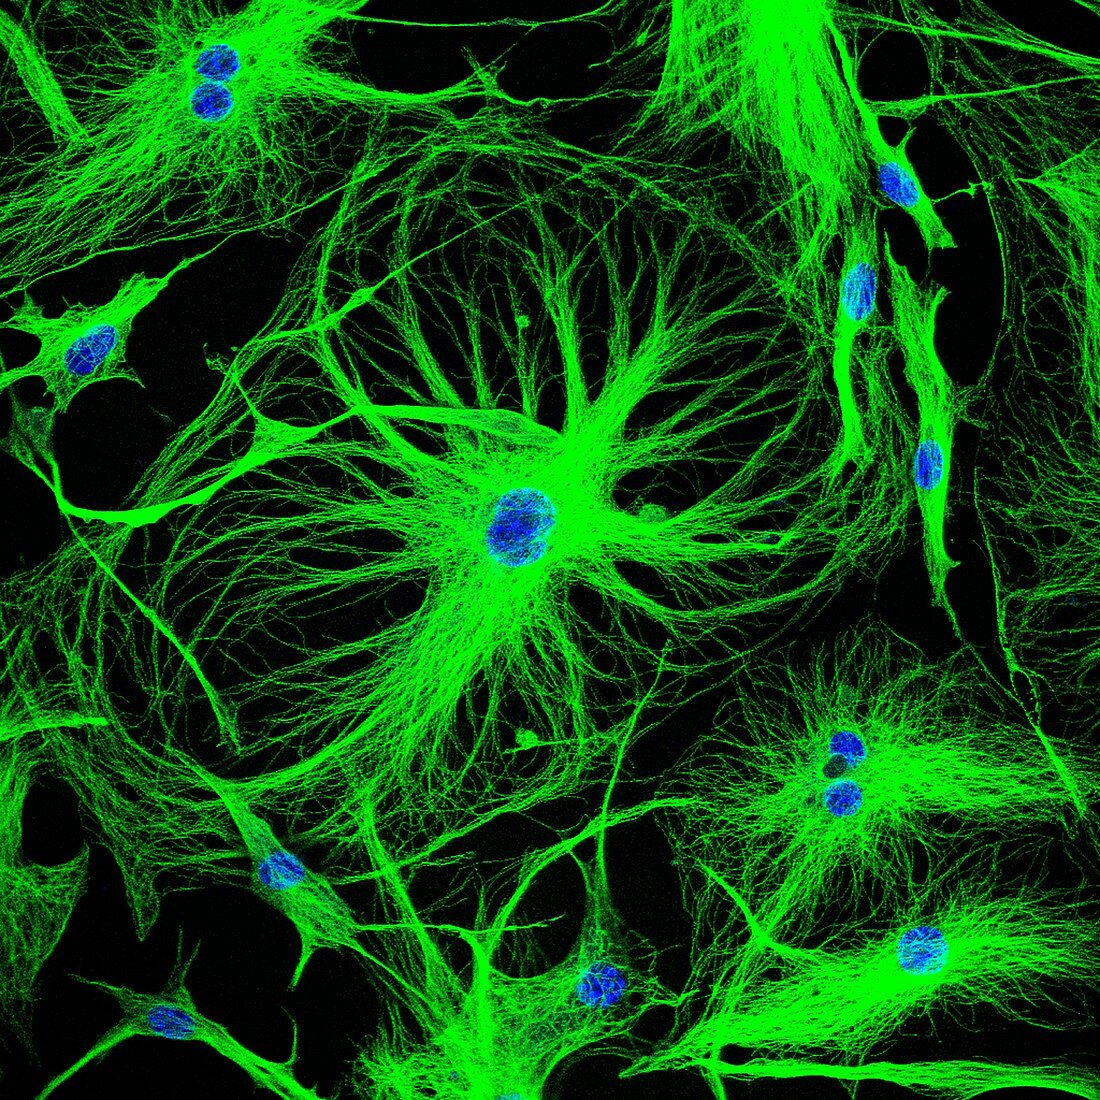 Astrocyte brain cells, confocal light micrograph